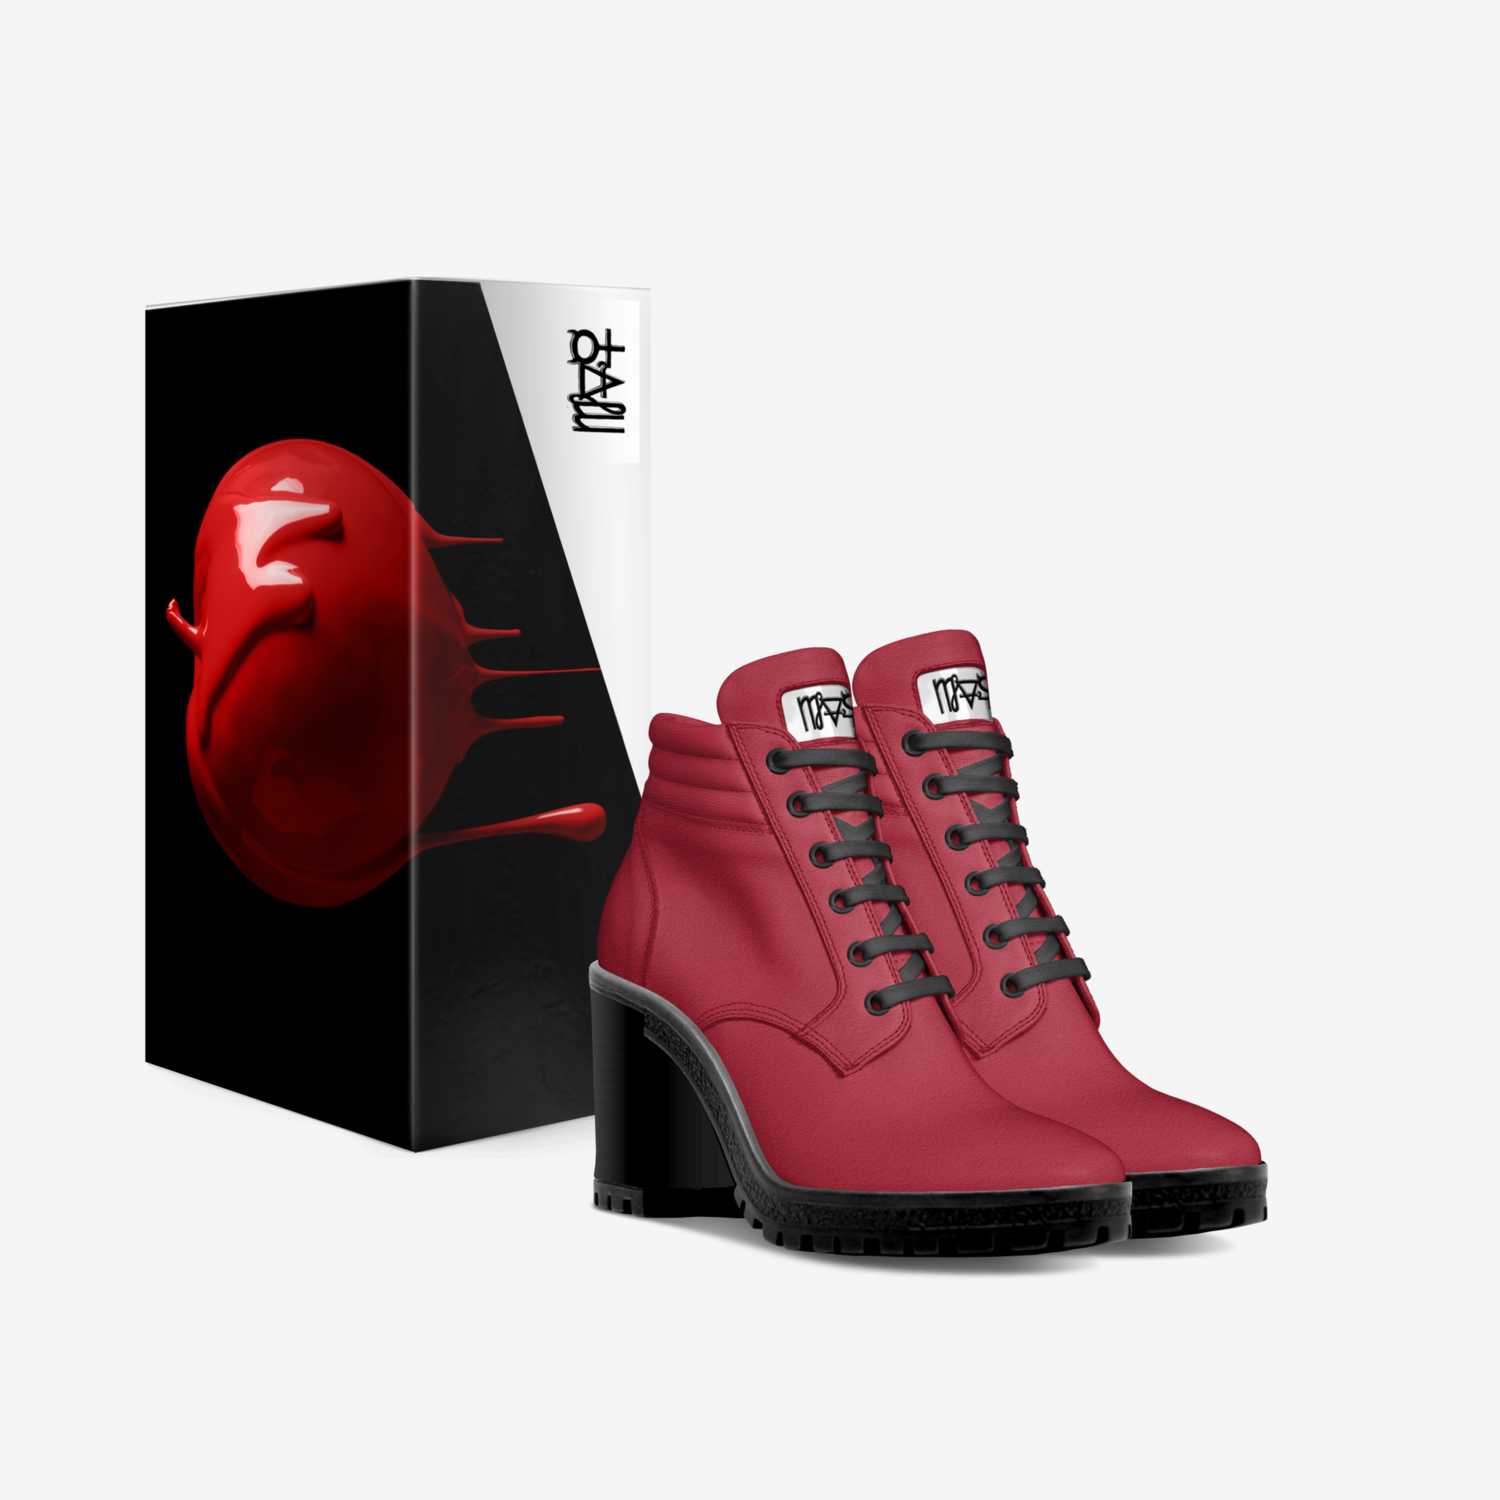 DripDrip custom made in Italy shoes by Nataya Domonique | Box view